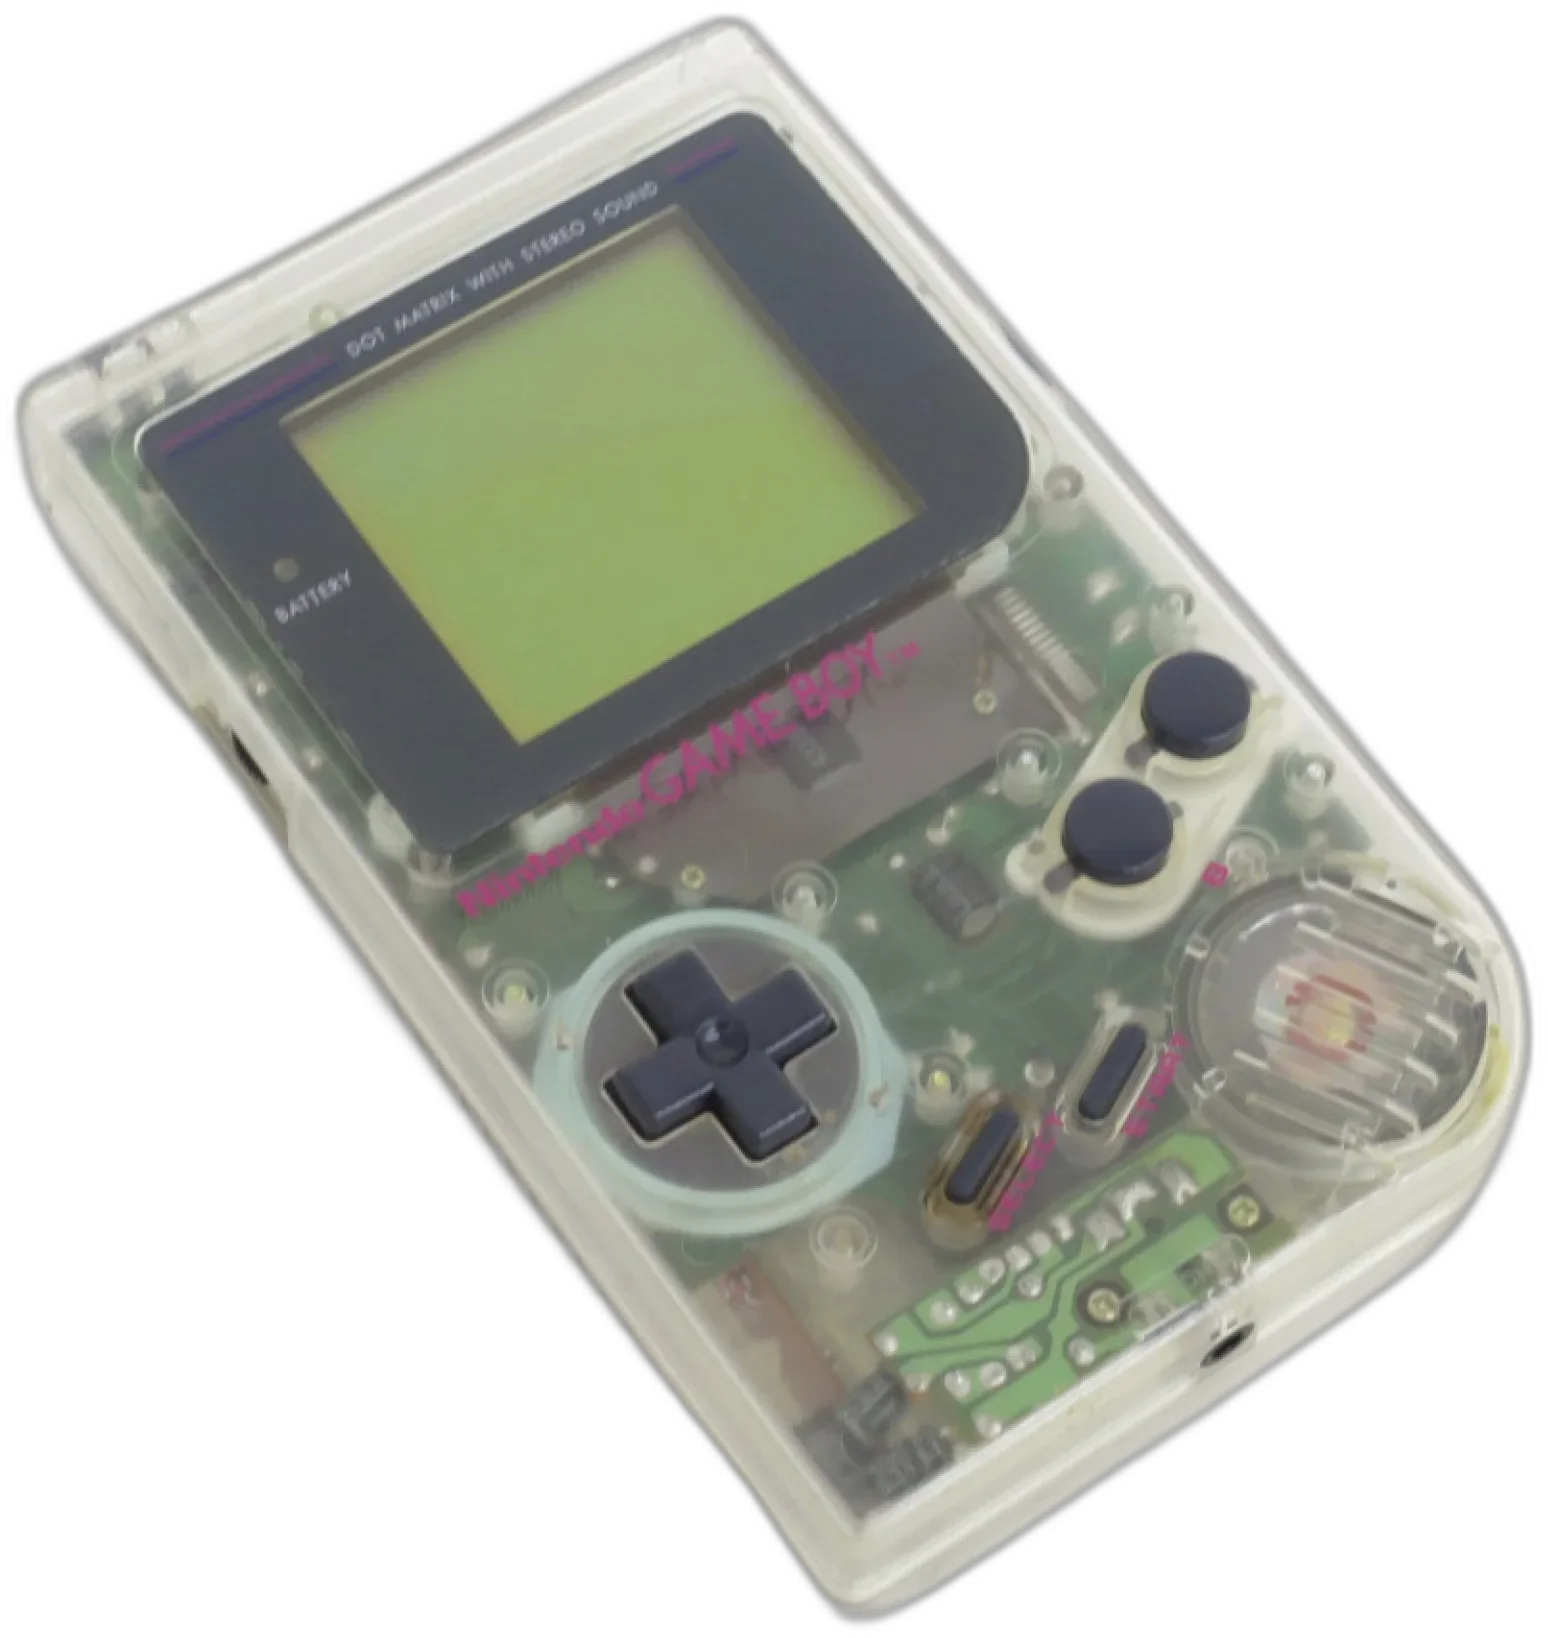 Nintendo Game Boy High Tech Transparent Console [AUS]